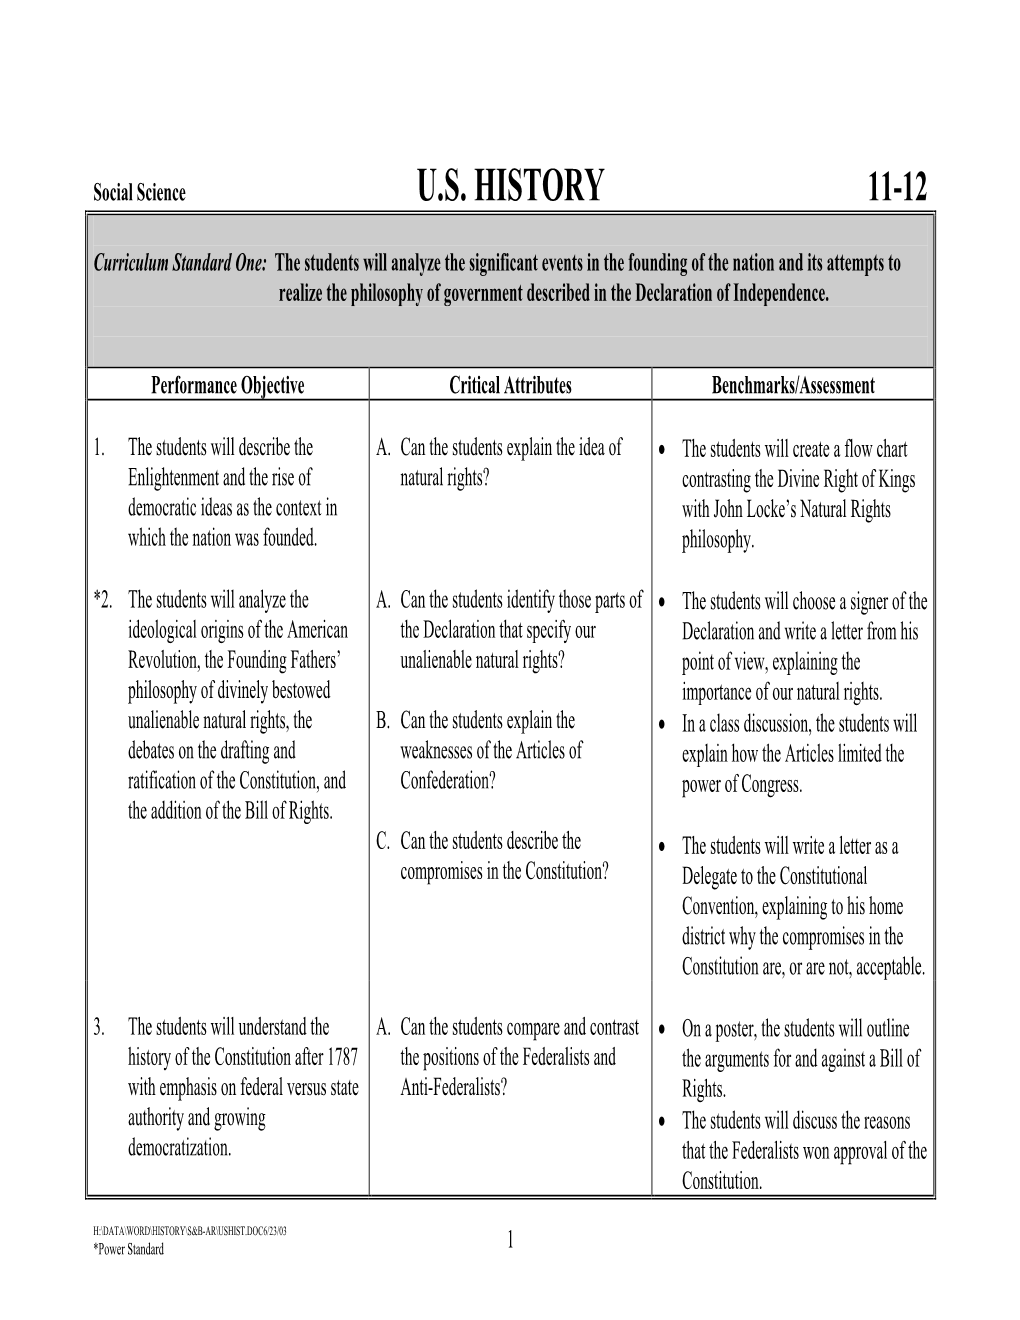 11-12 U.S. History